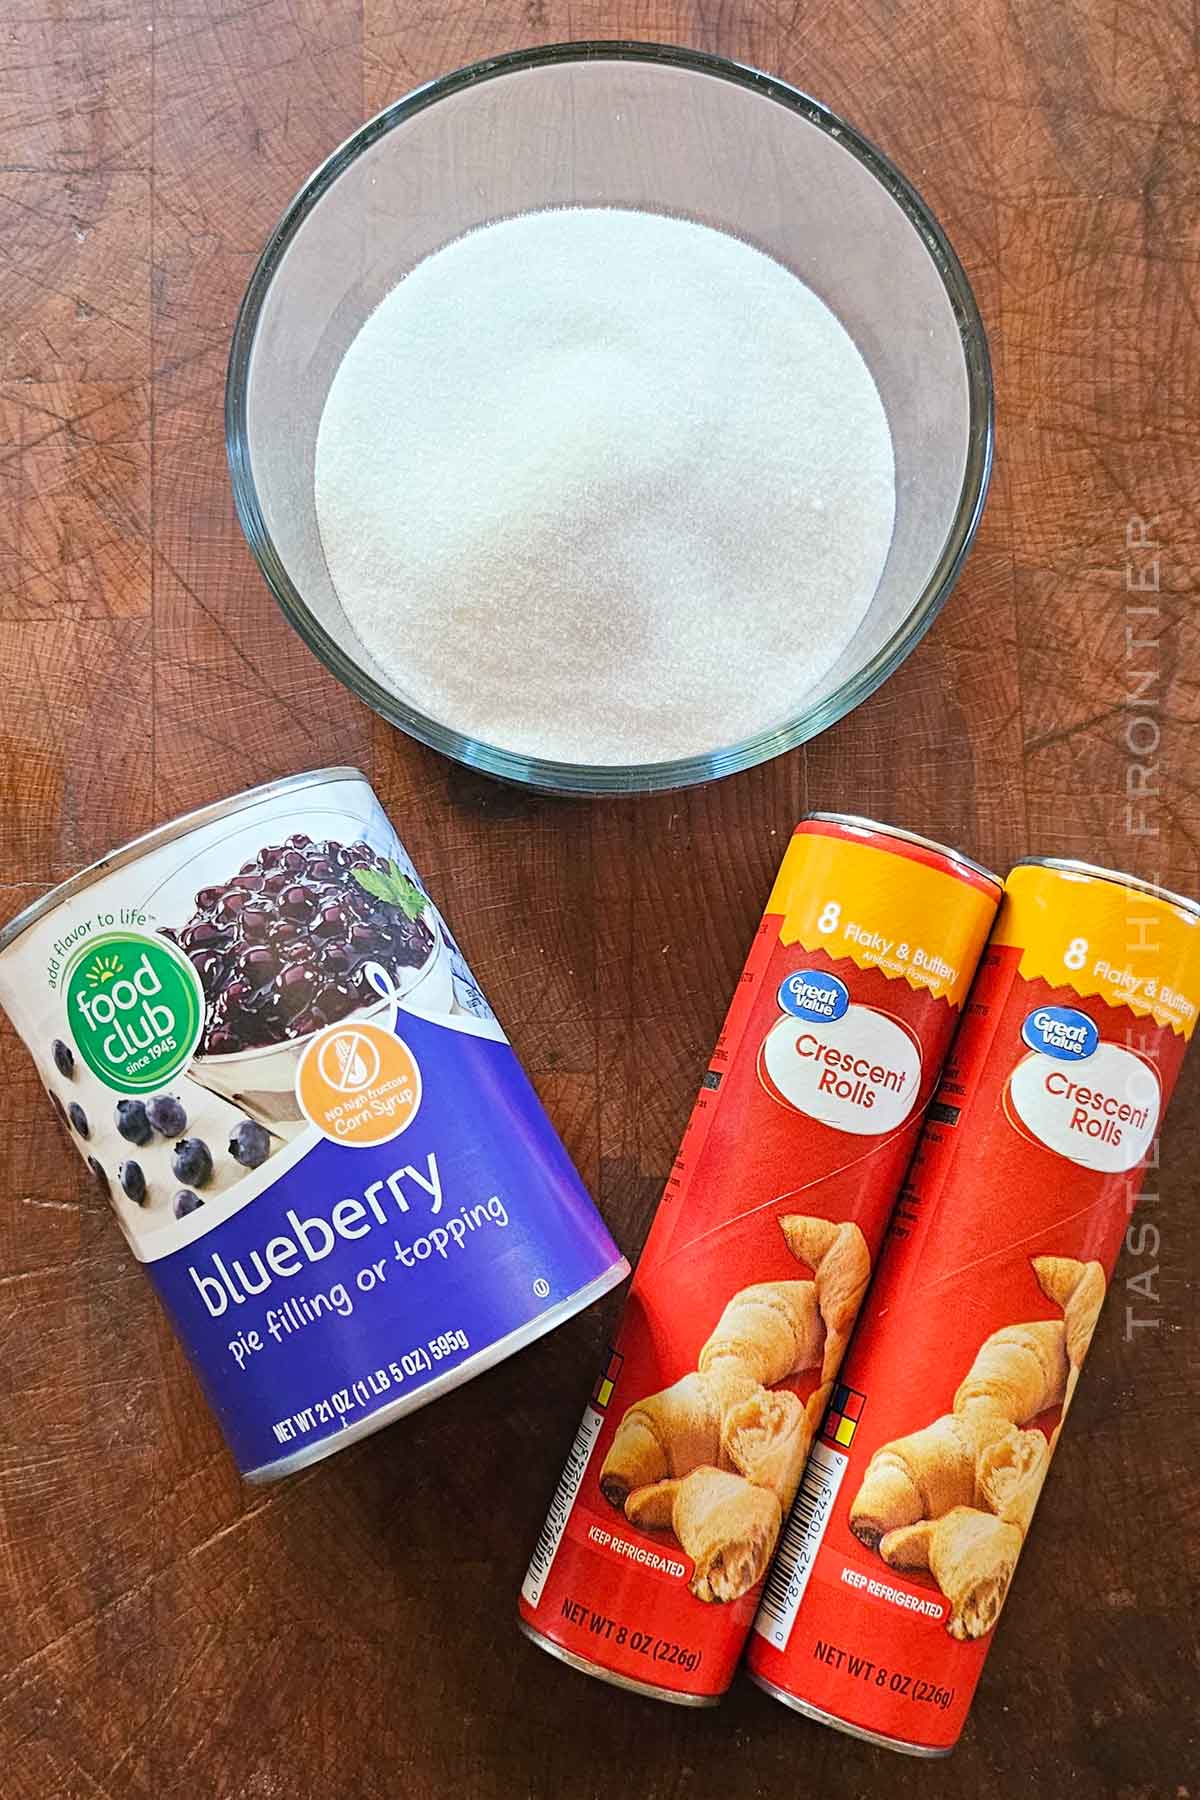 Blueberry Cruffin ingredients